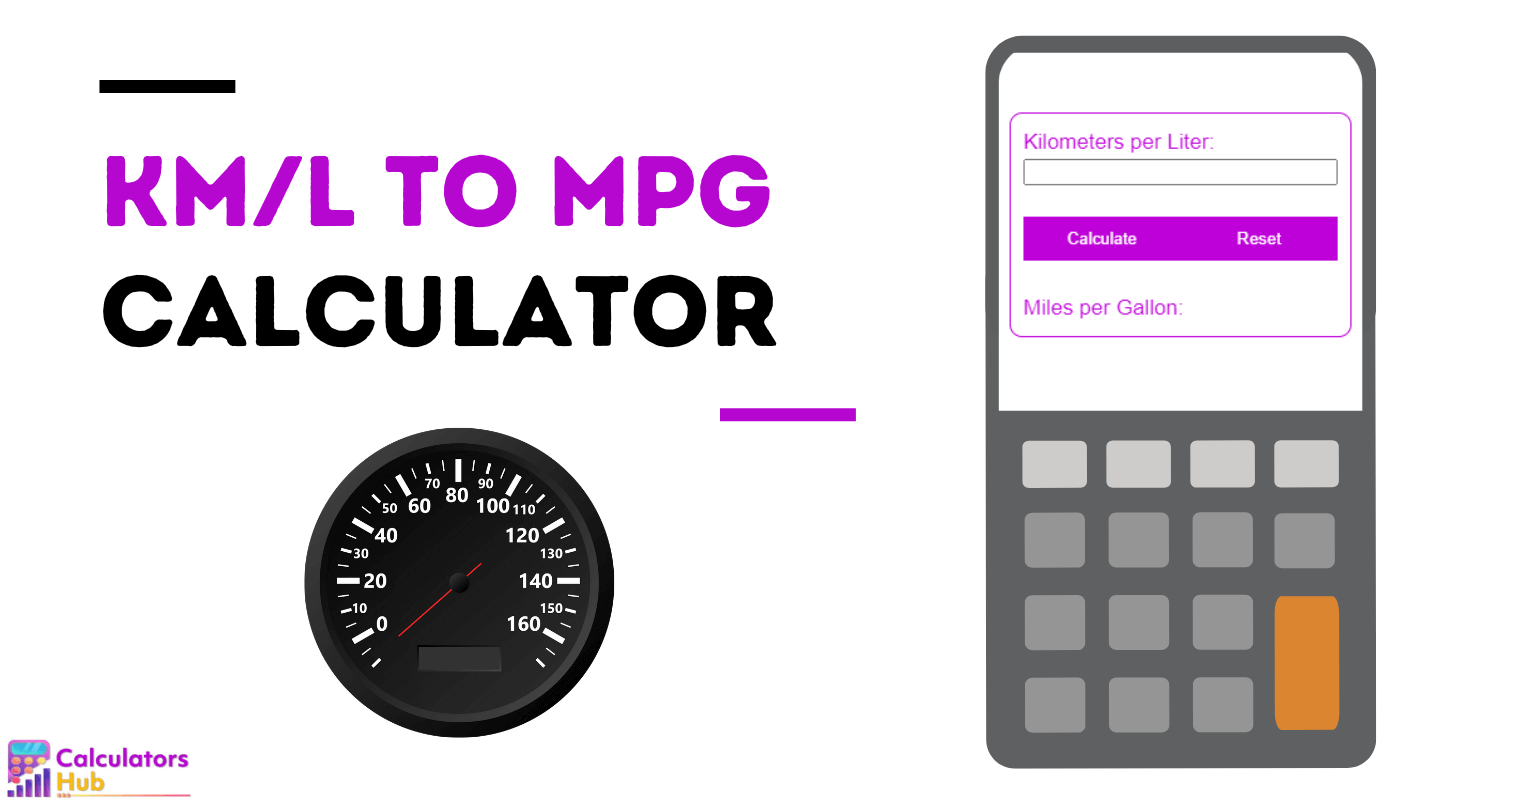 km/l to mpg Calculator